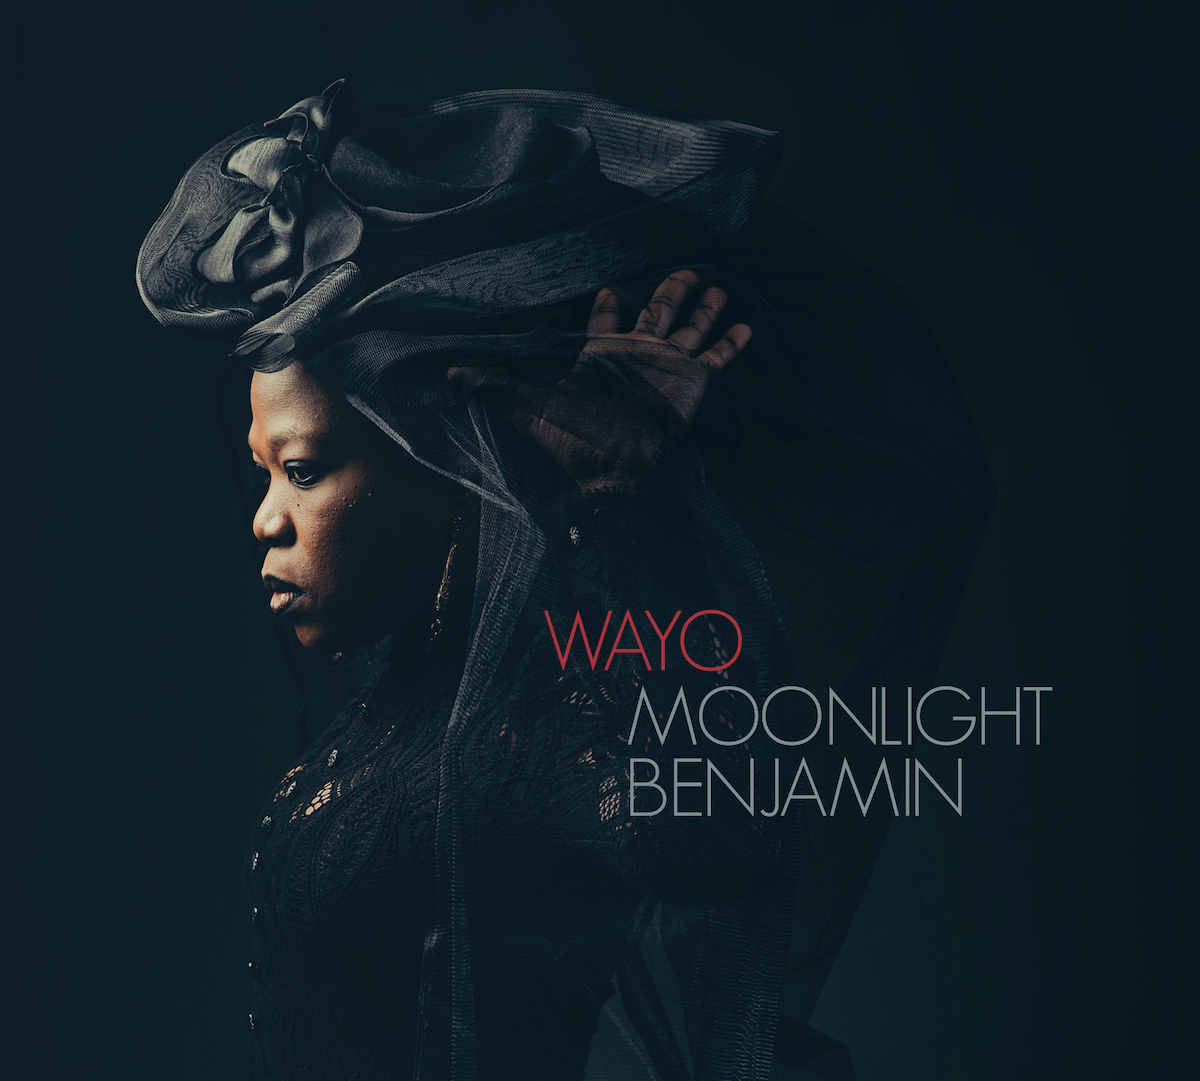 Moonlight Benjamin - Wayo - Print.indd